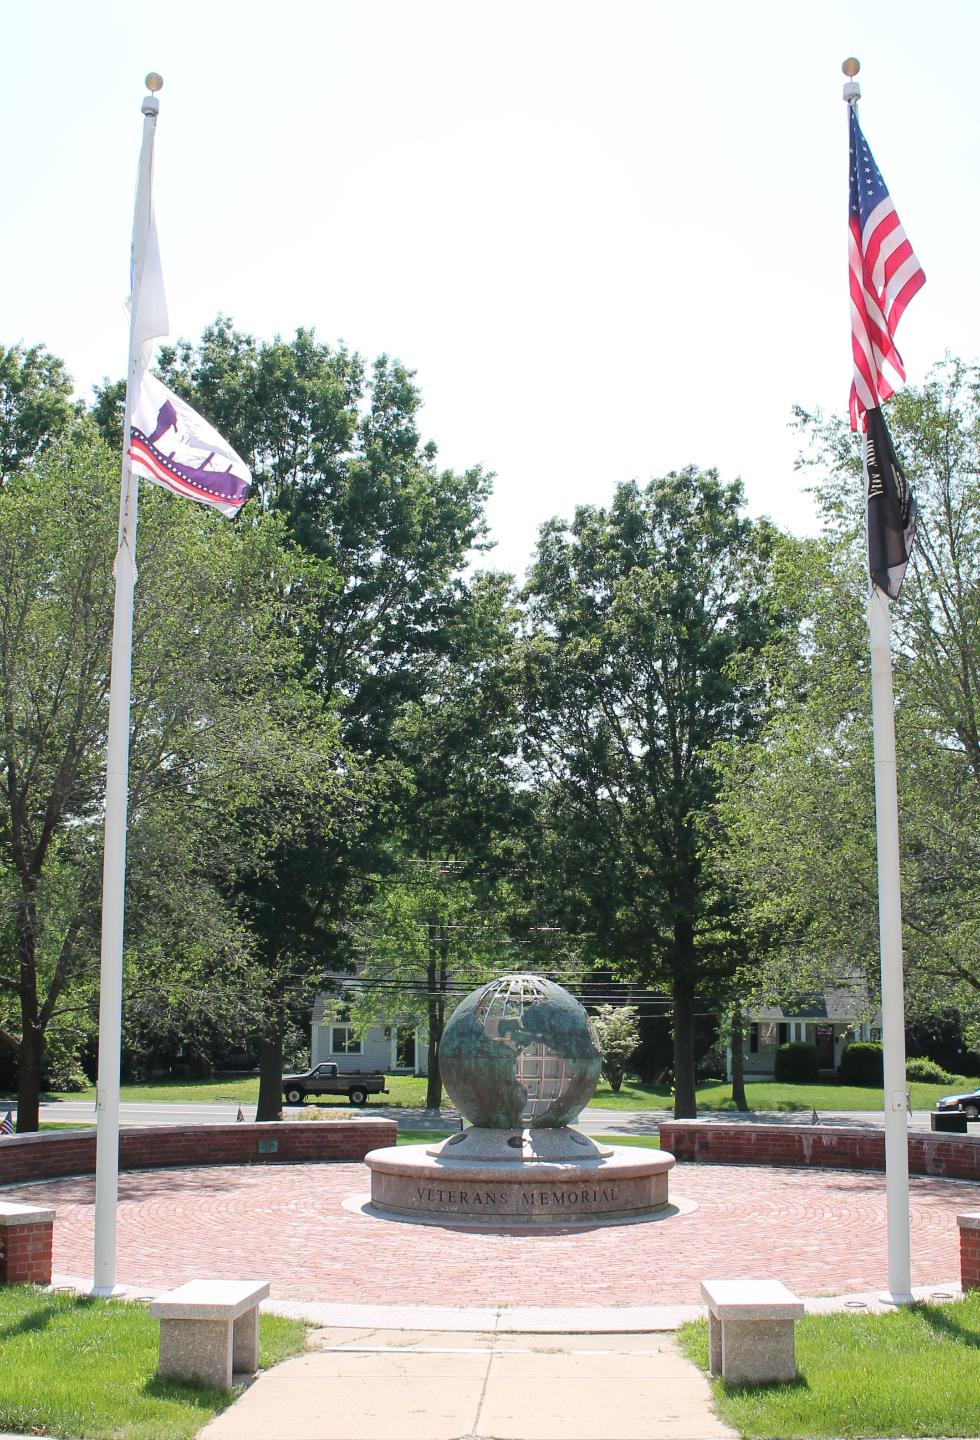 Hingham Massachusetts Municipal Plaza All Veterans Memorial